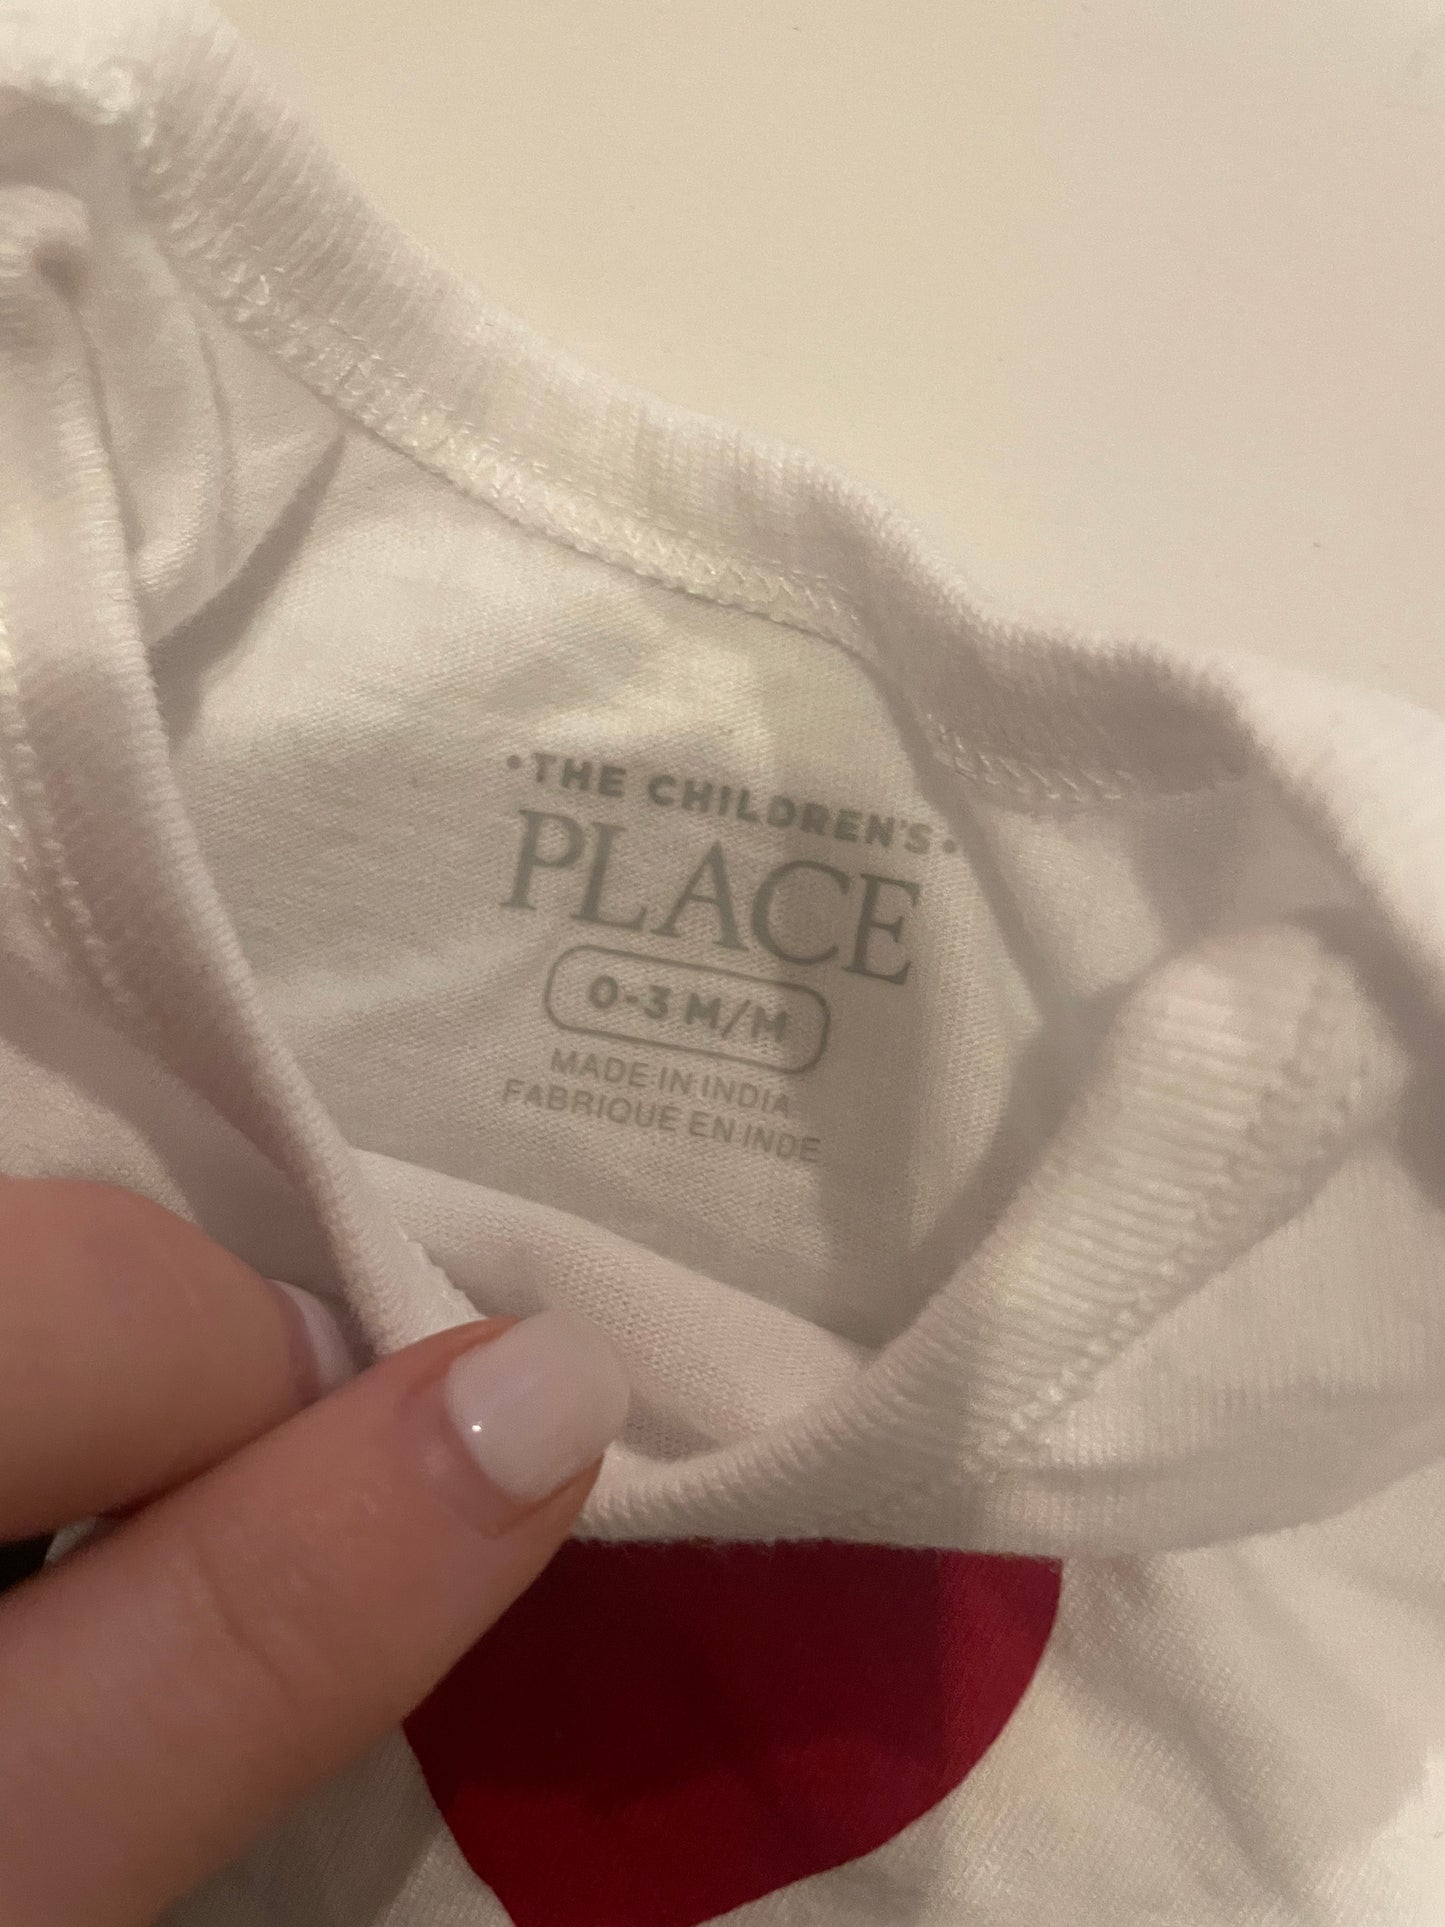 Children’s Place 0-3 month Diapee Shirt